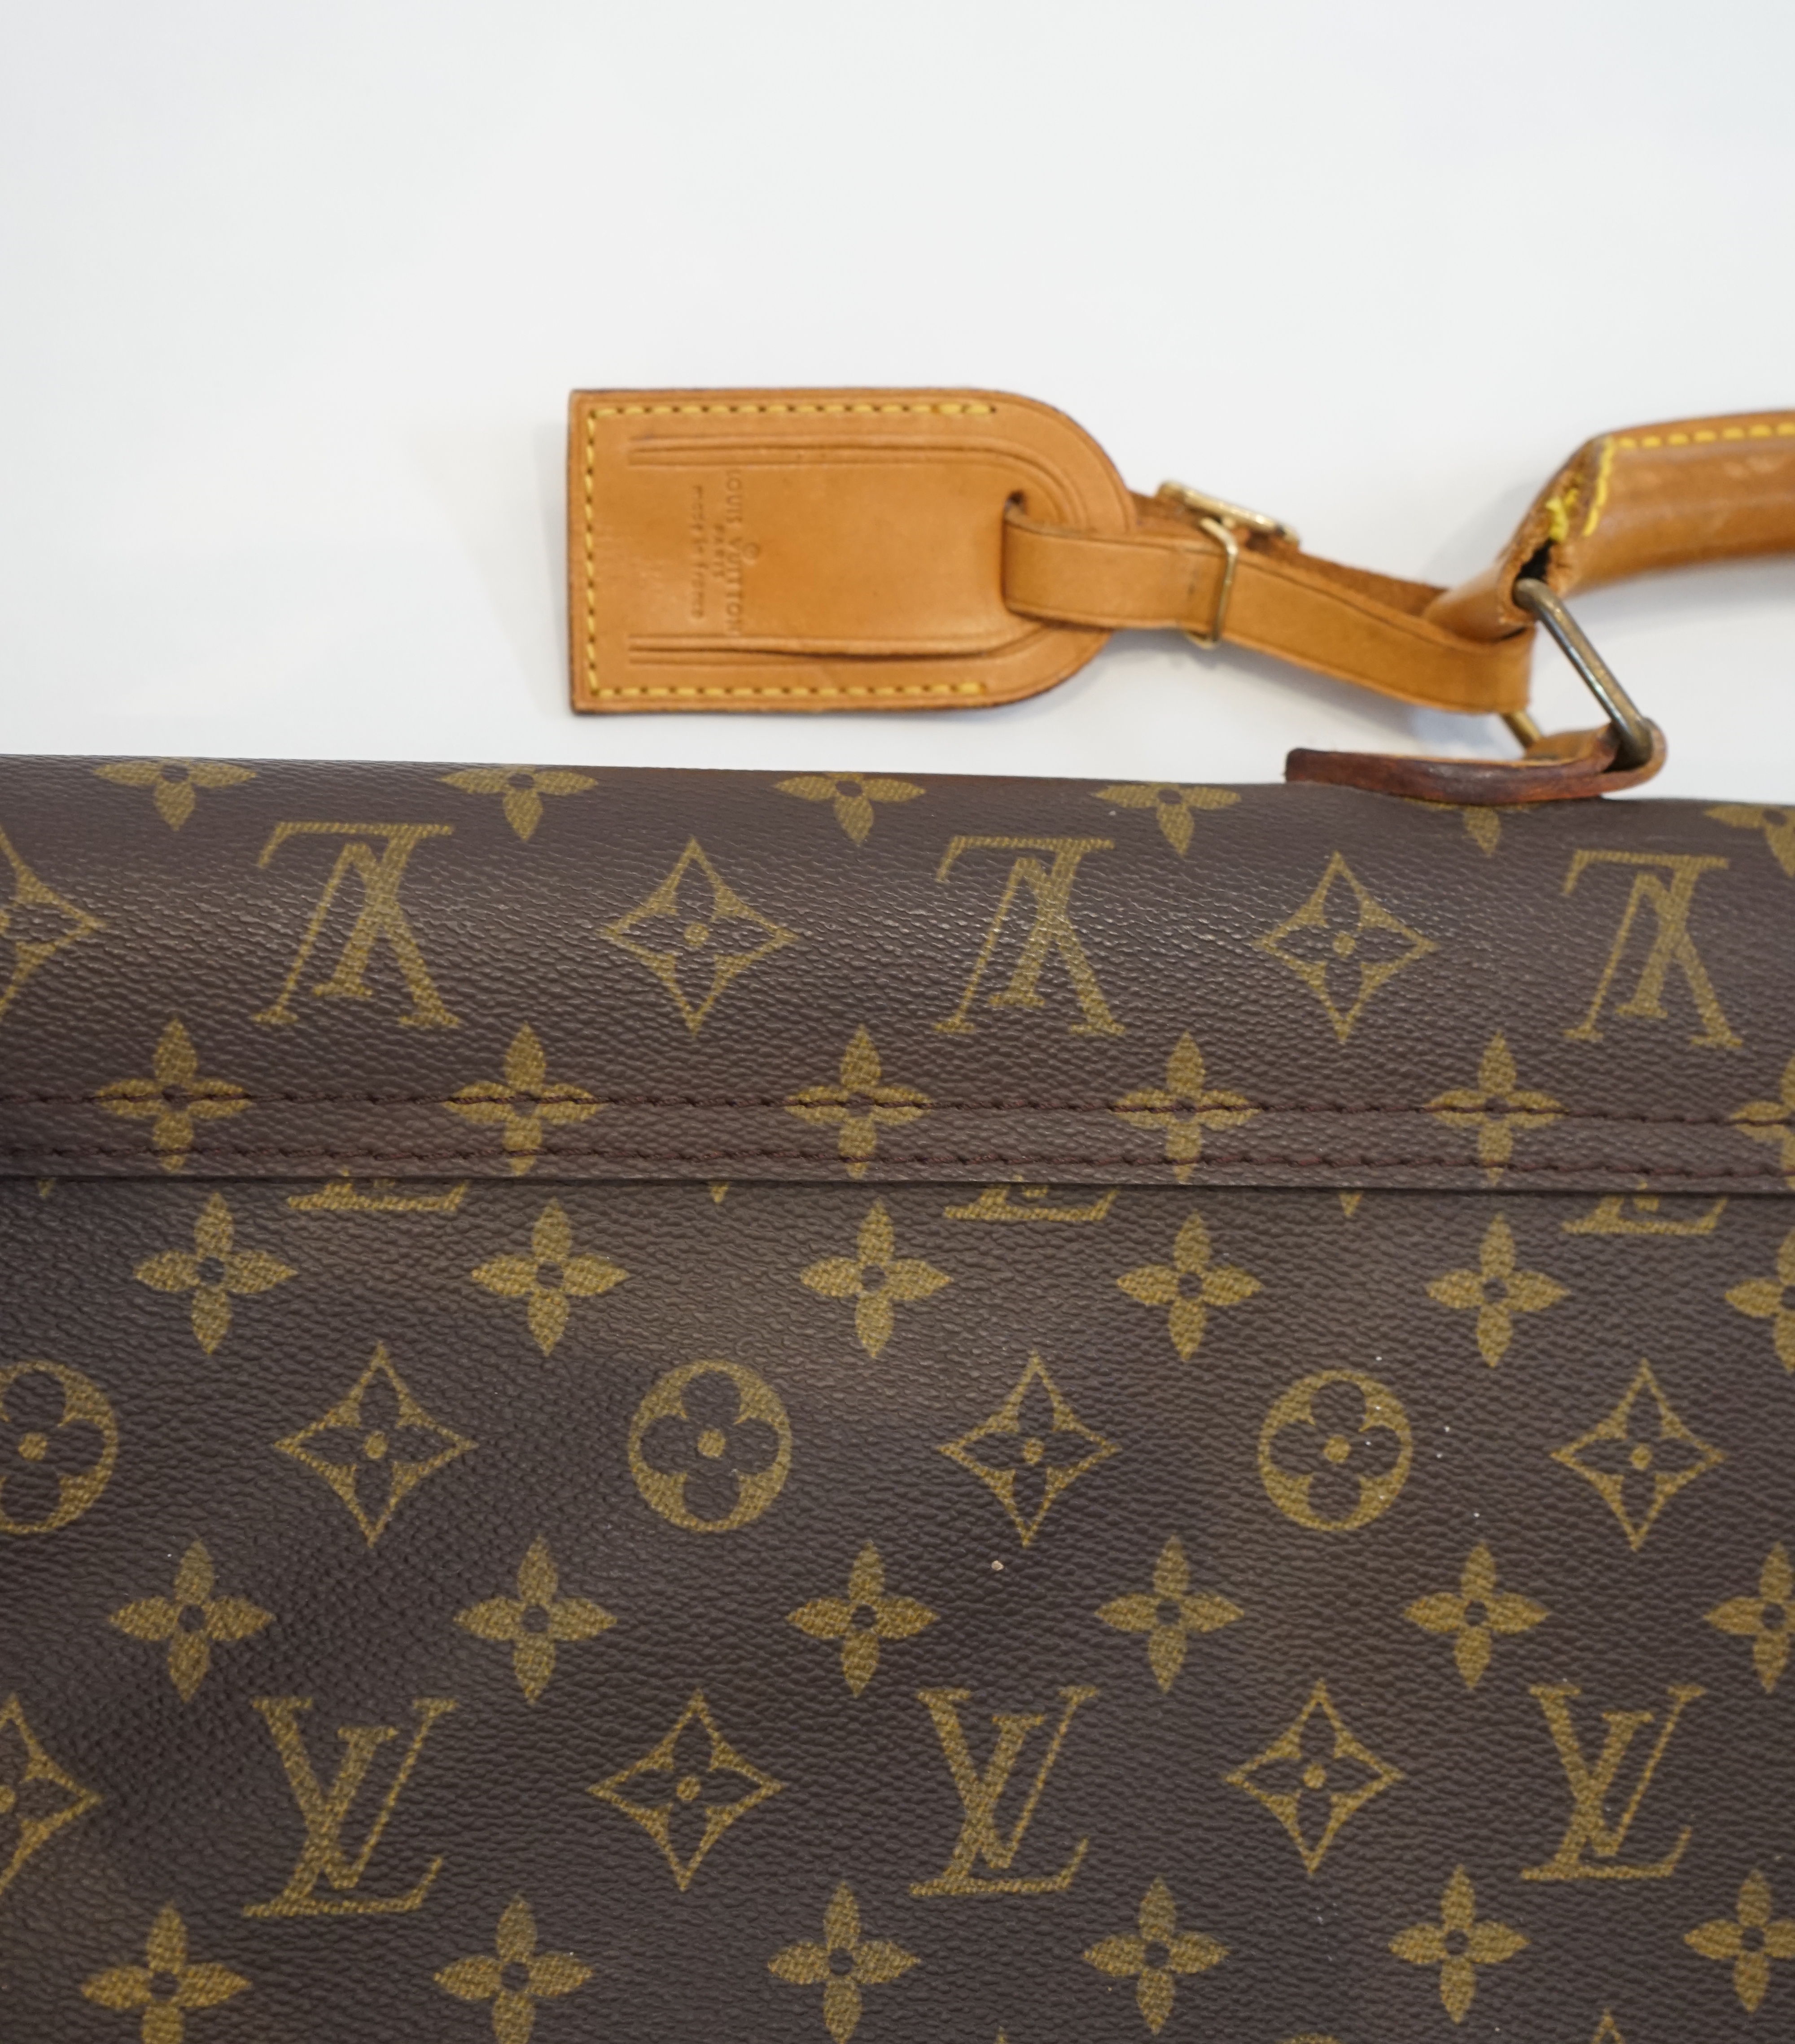 A Louis Vuitton special order folio case width 90cm, depth 4cm, height 63cm